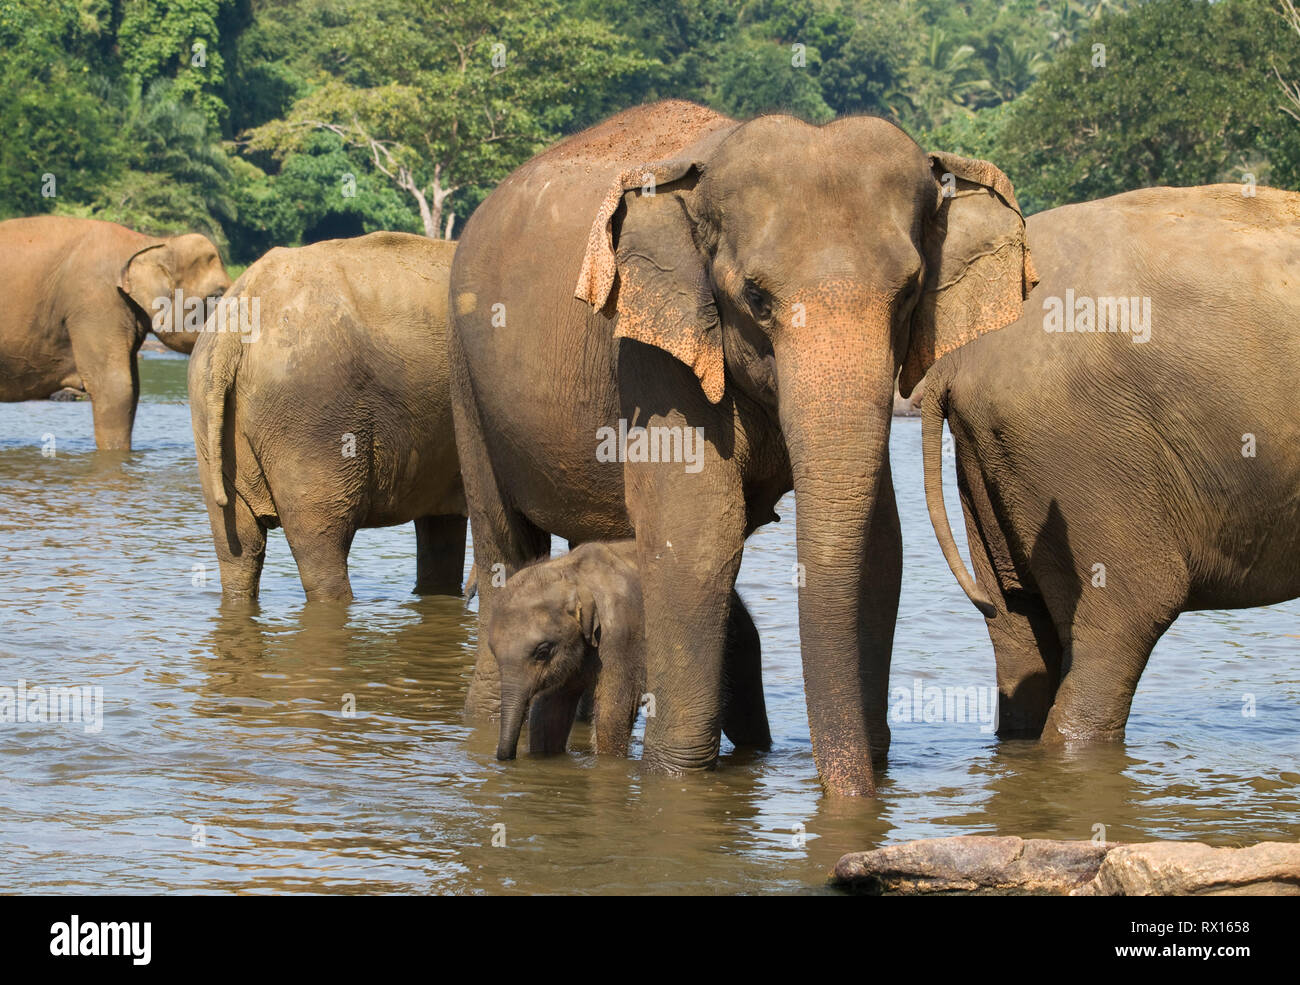 Asian elephants bathing in river Stock Photo